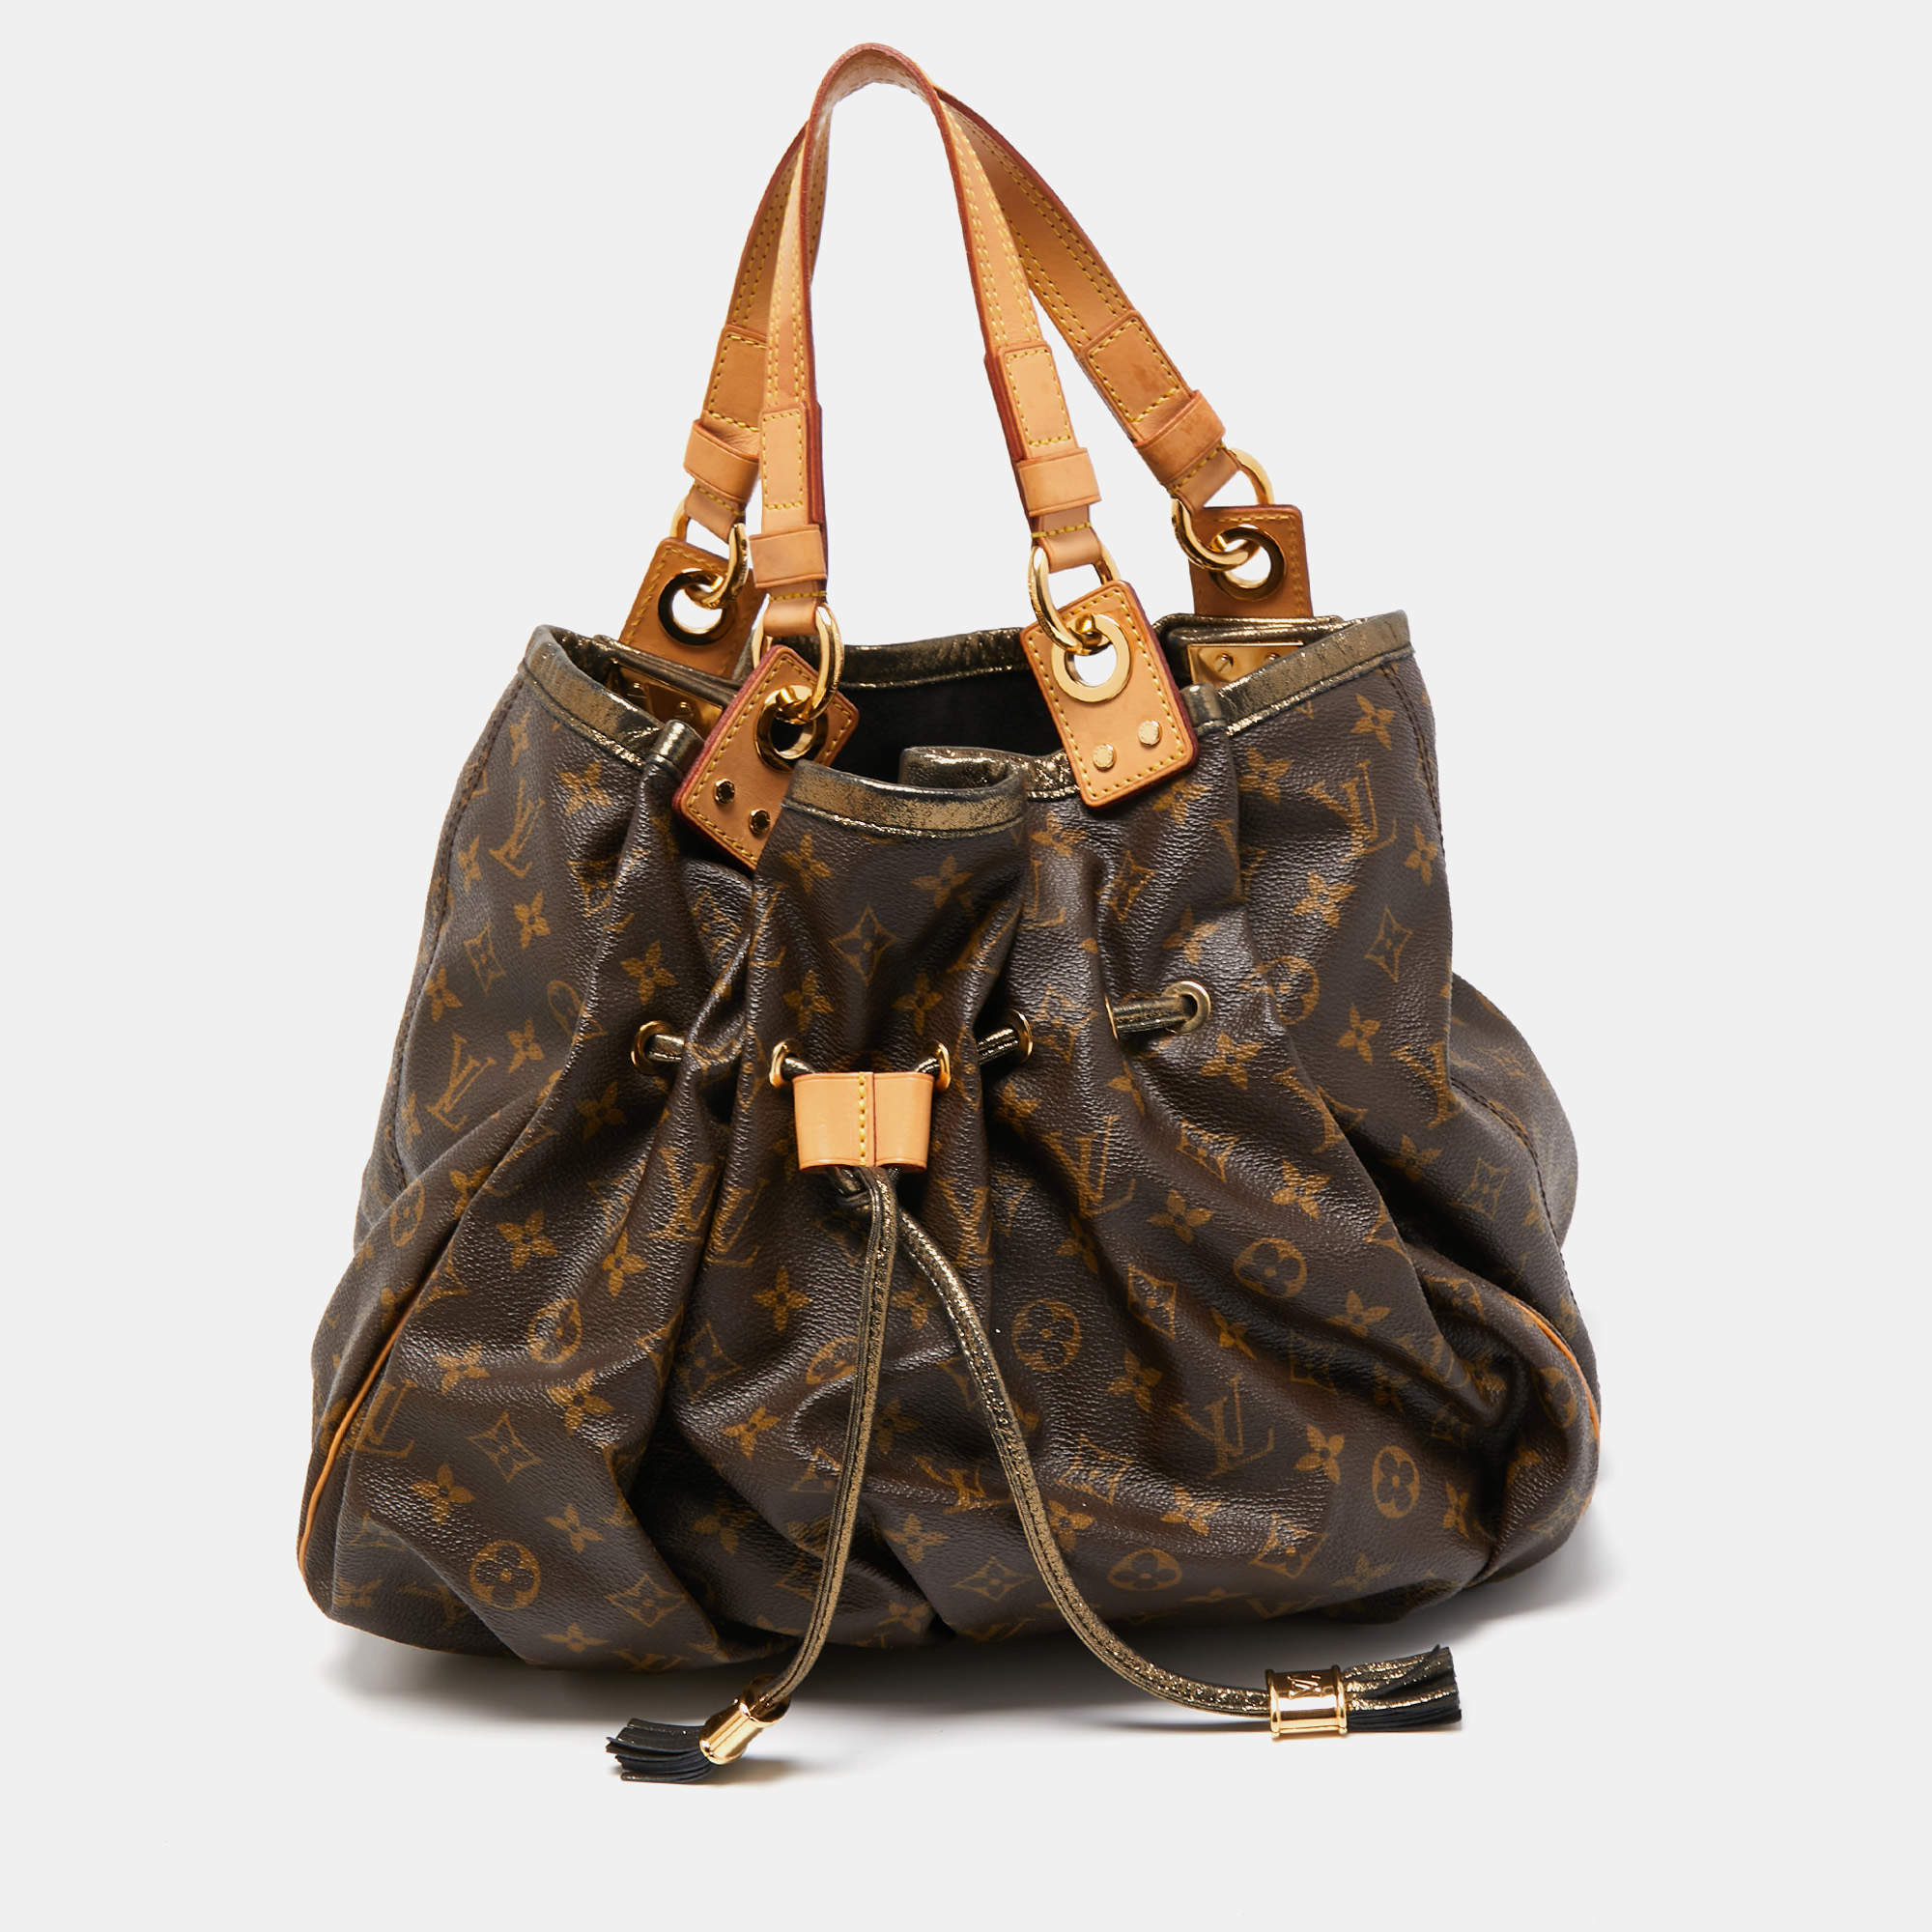 Louis Vuitton Irene Bag